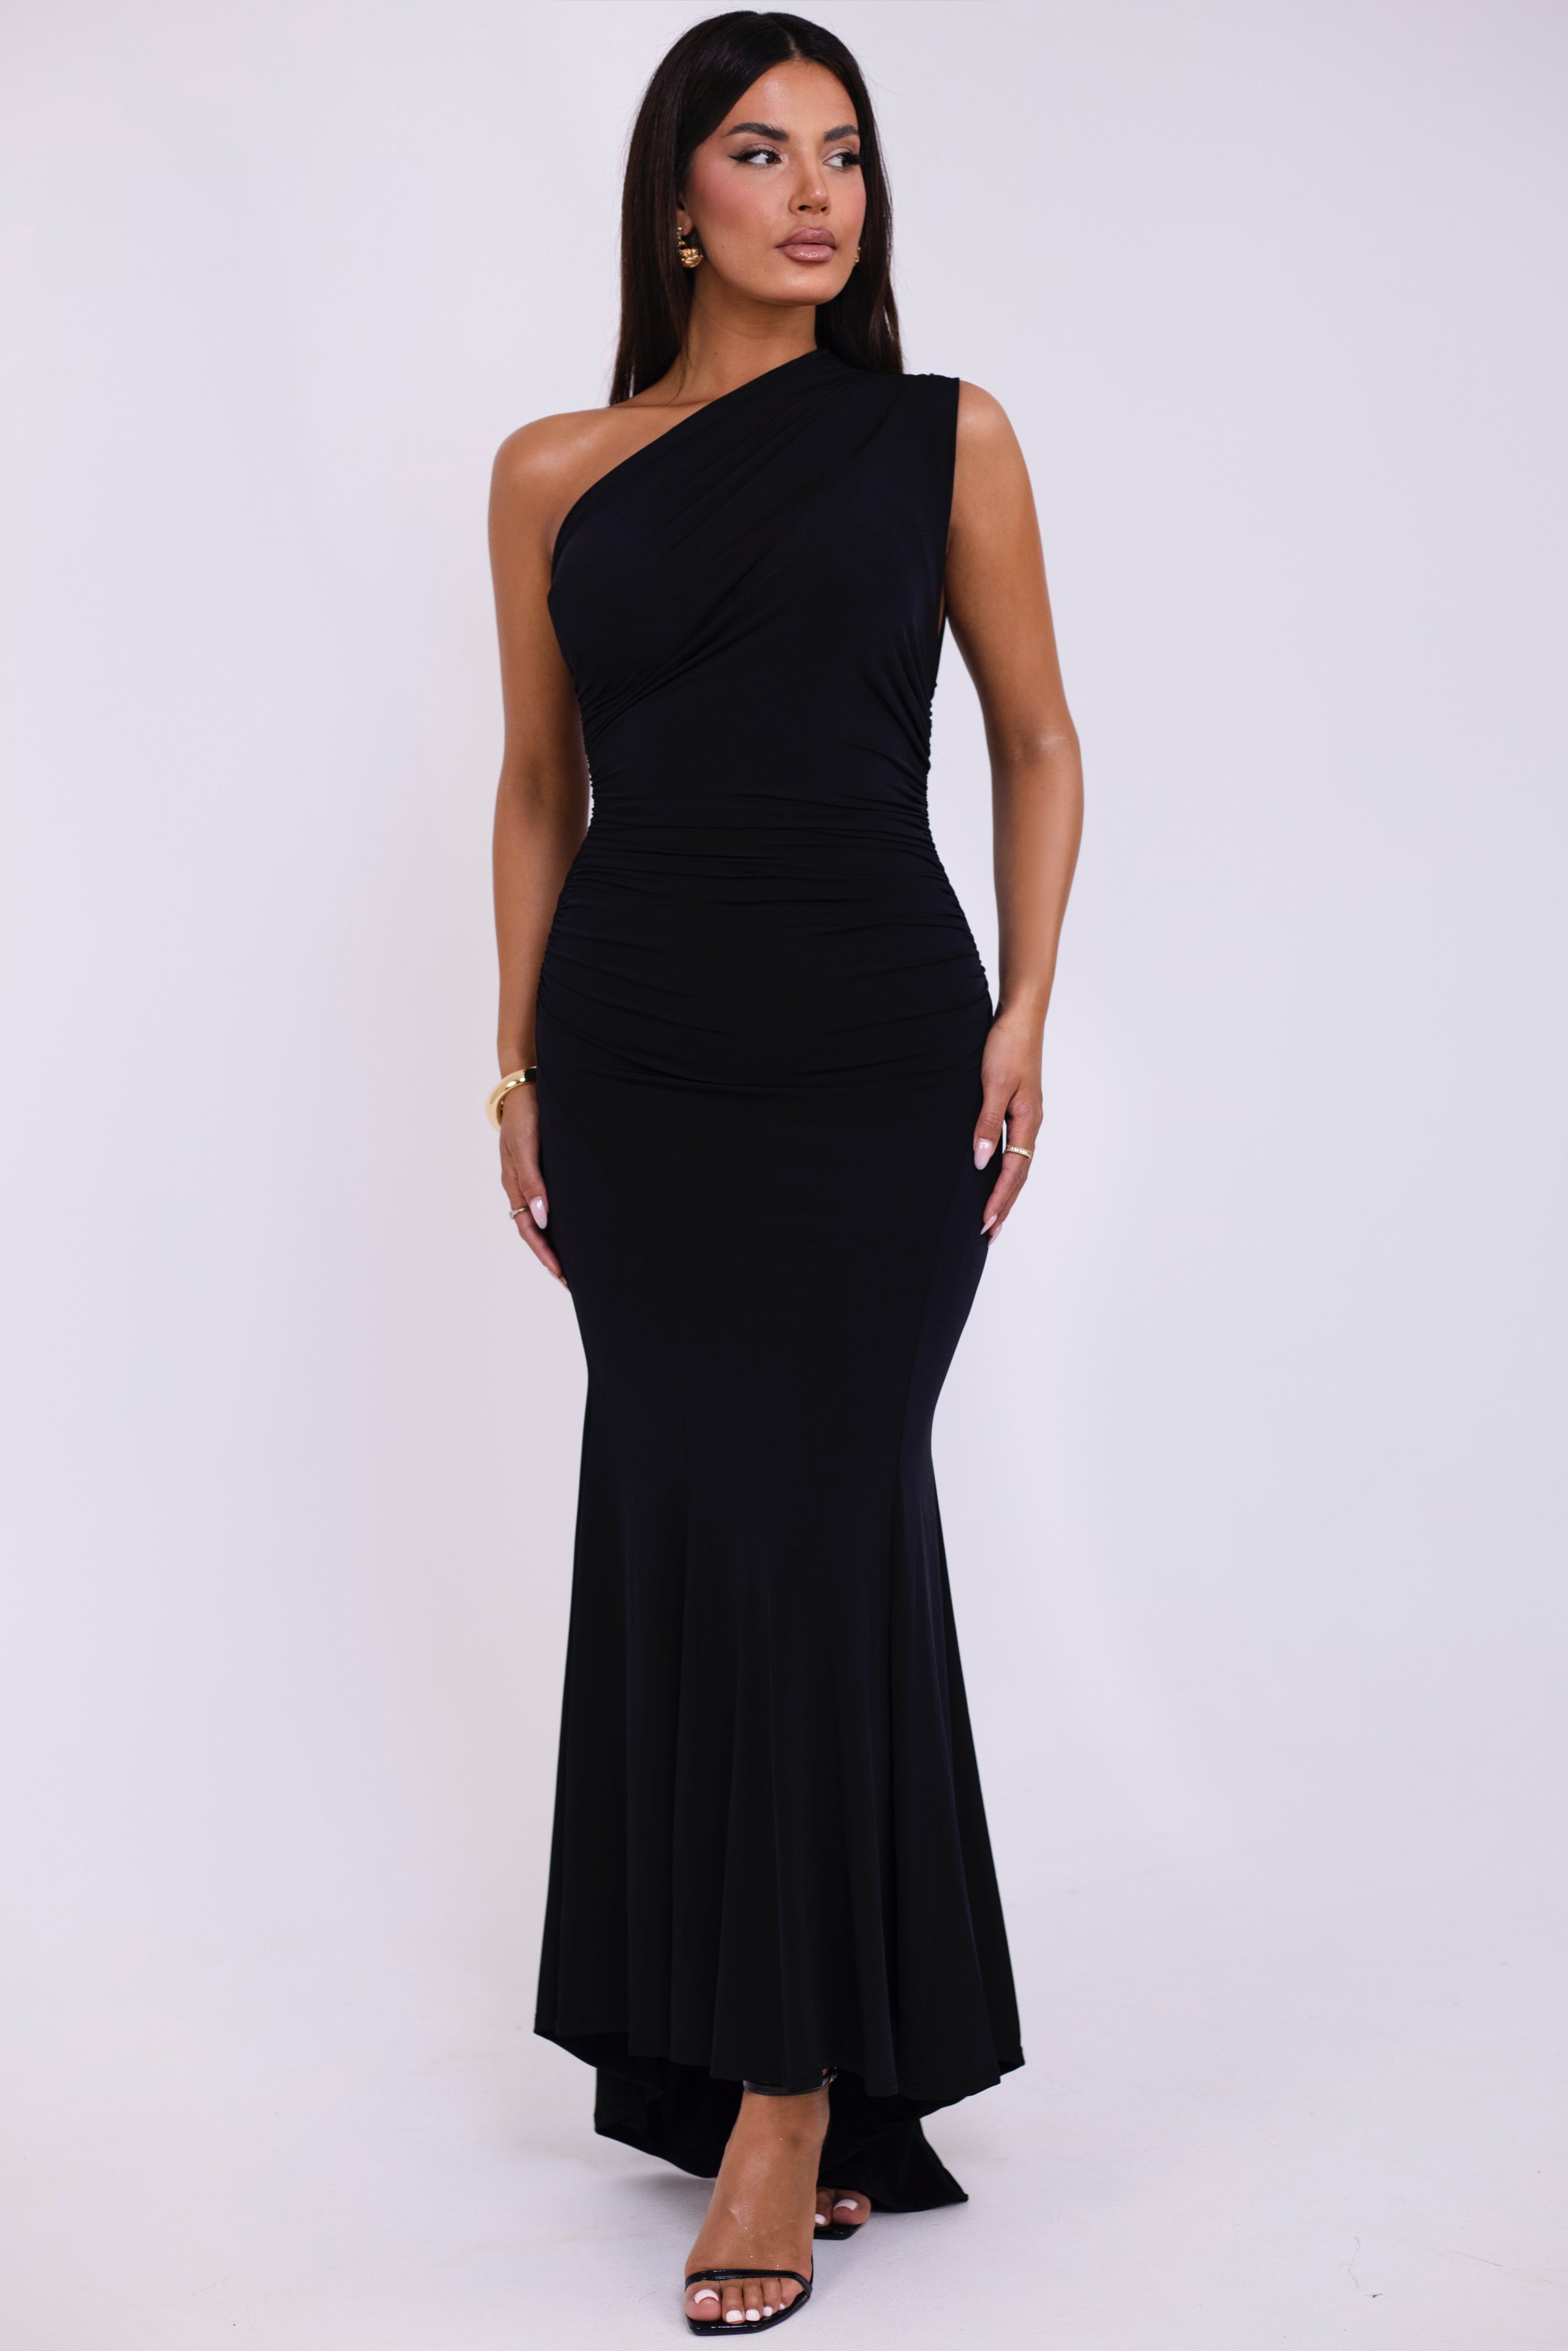 Raynne Black Dress